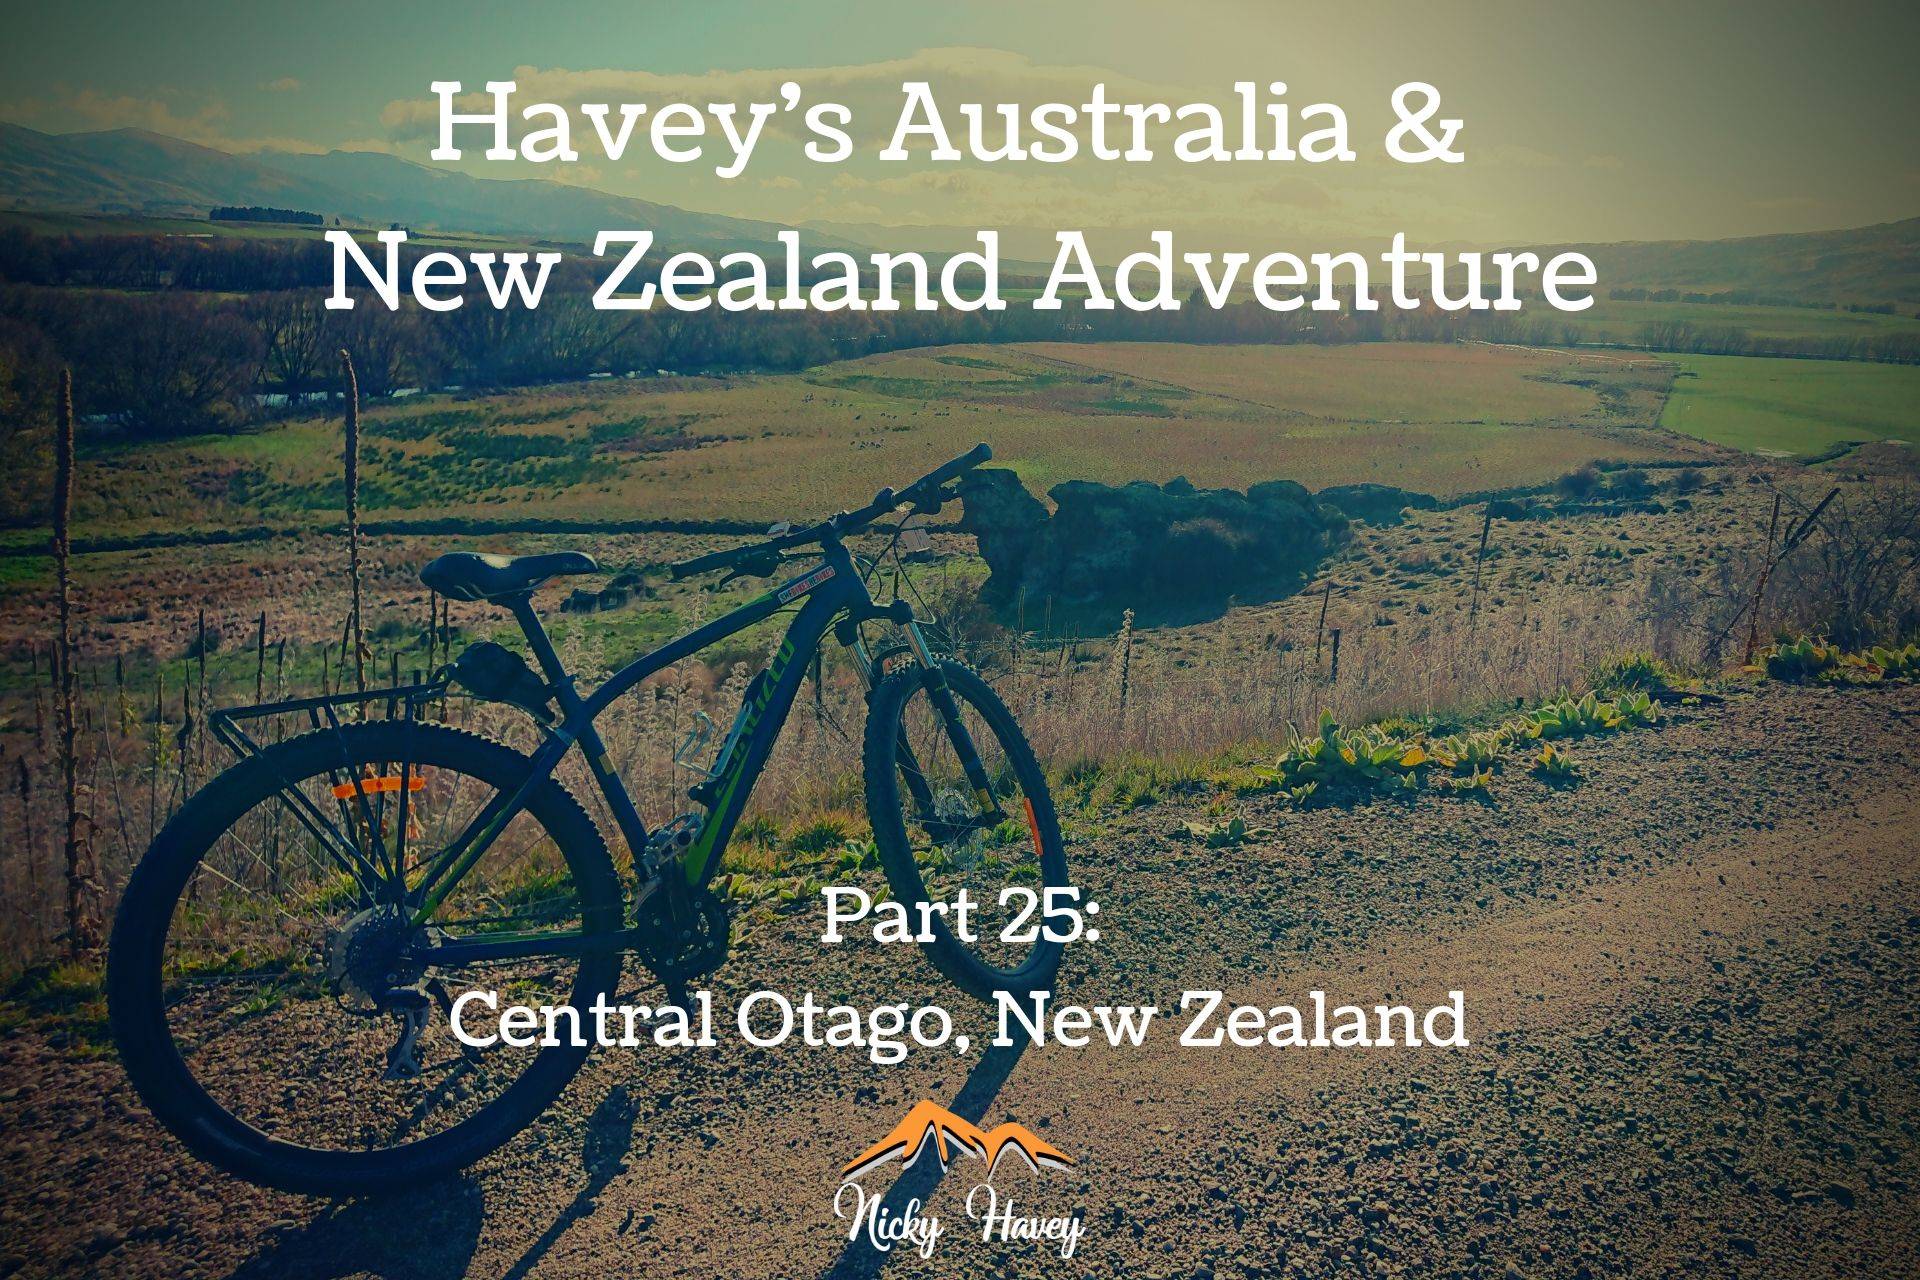 Havey’s Australia & New Zealand Adventure Part 25 – Central Otago, New Zealand